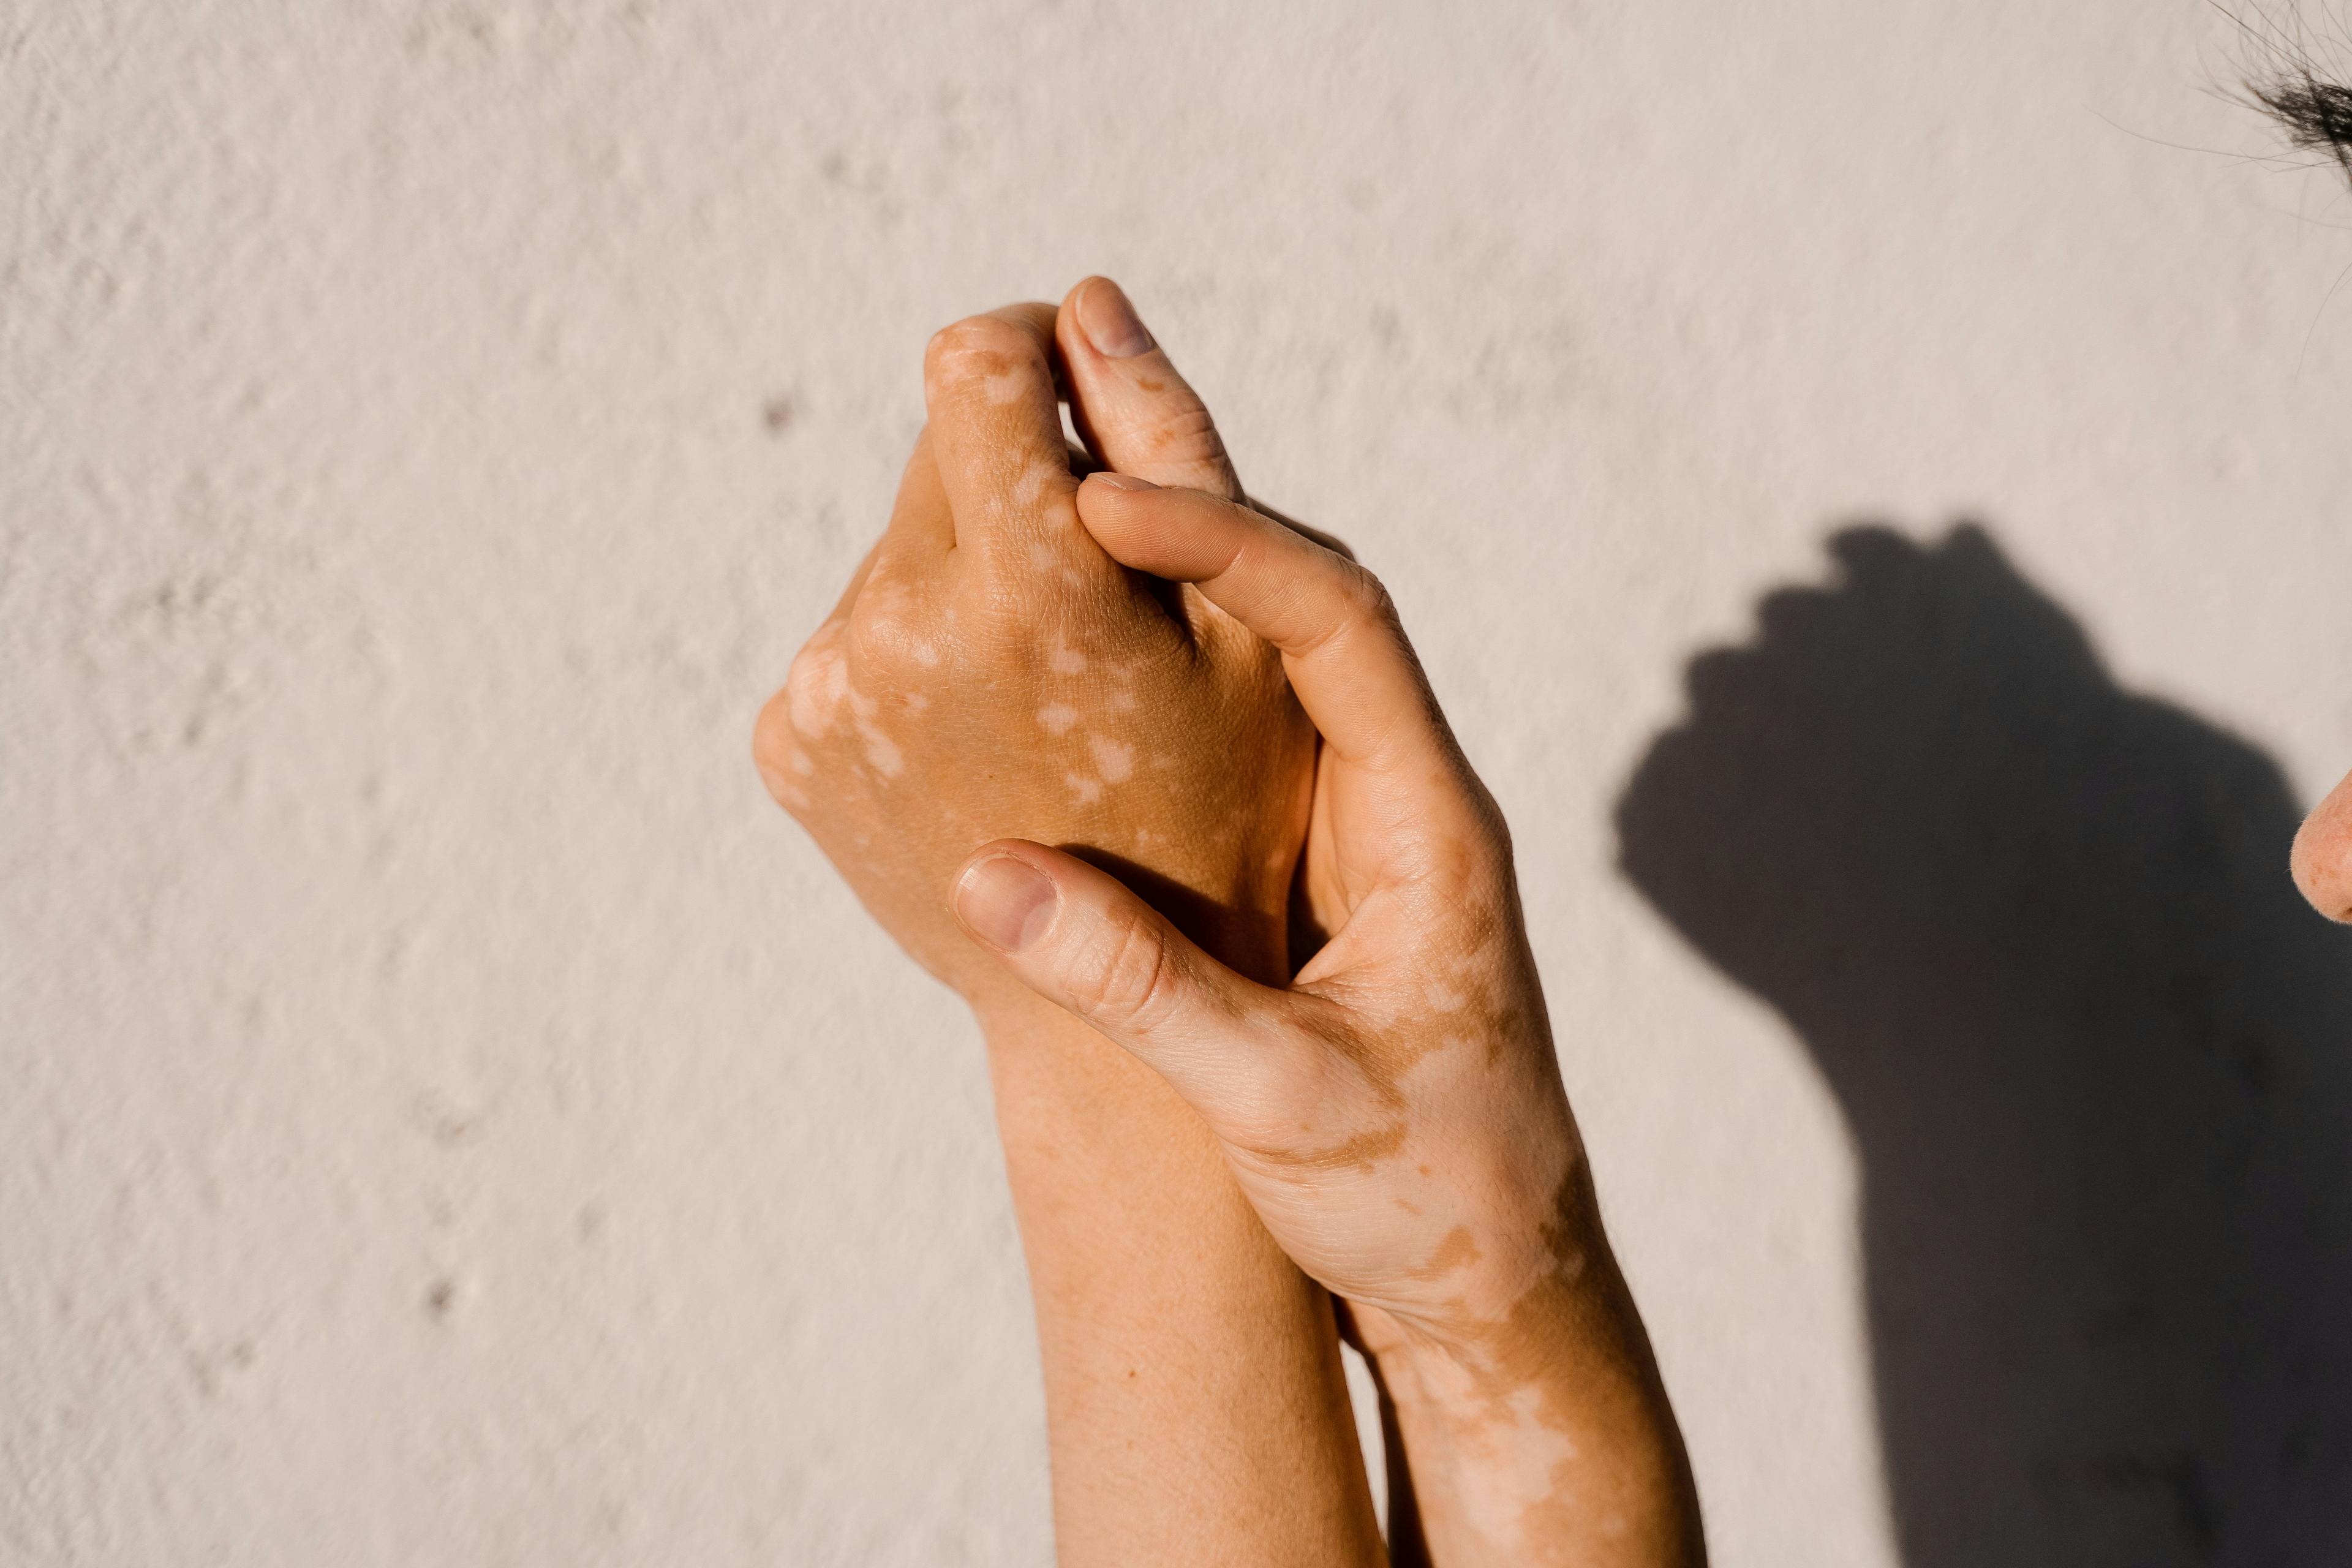 Vitiligo skin pigmentation on the hands of woman | Image Credit: Rabizo Anatolii - stock.adobe.com